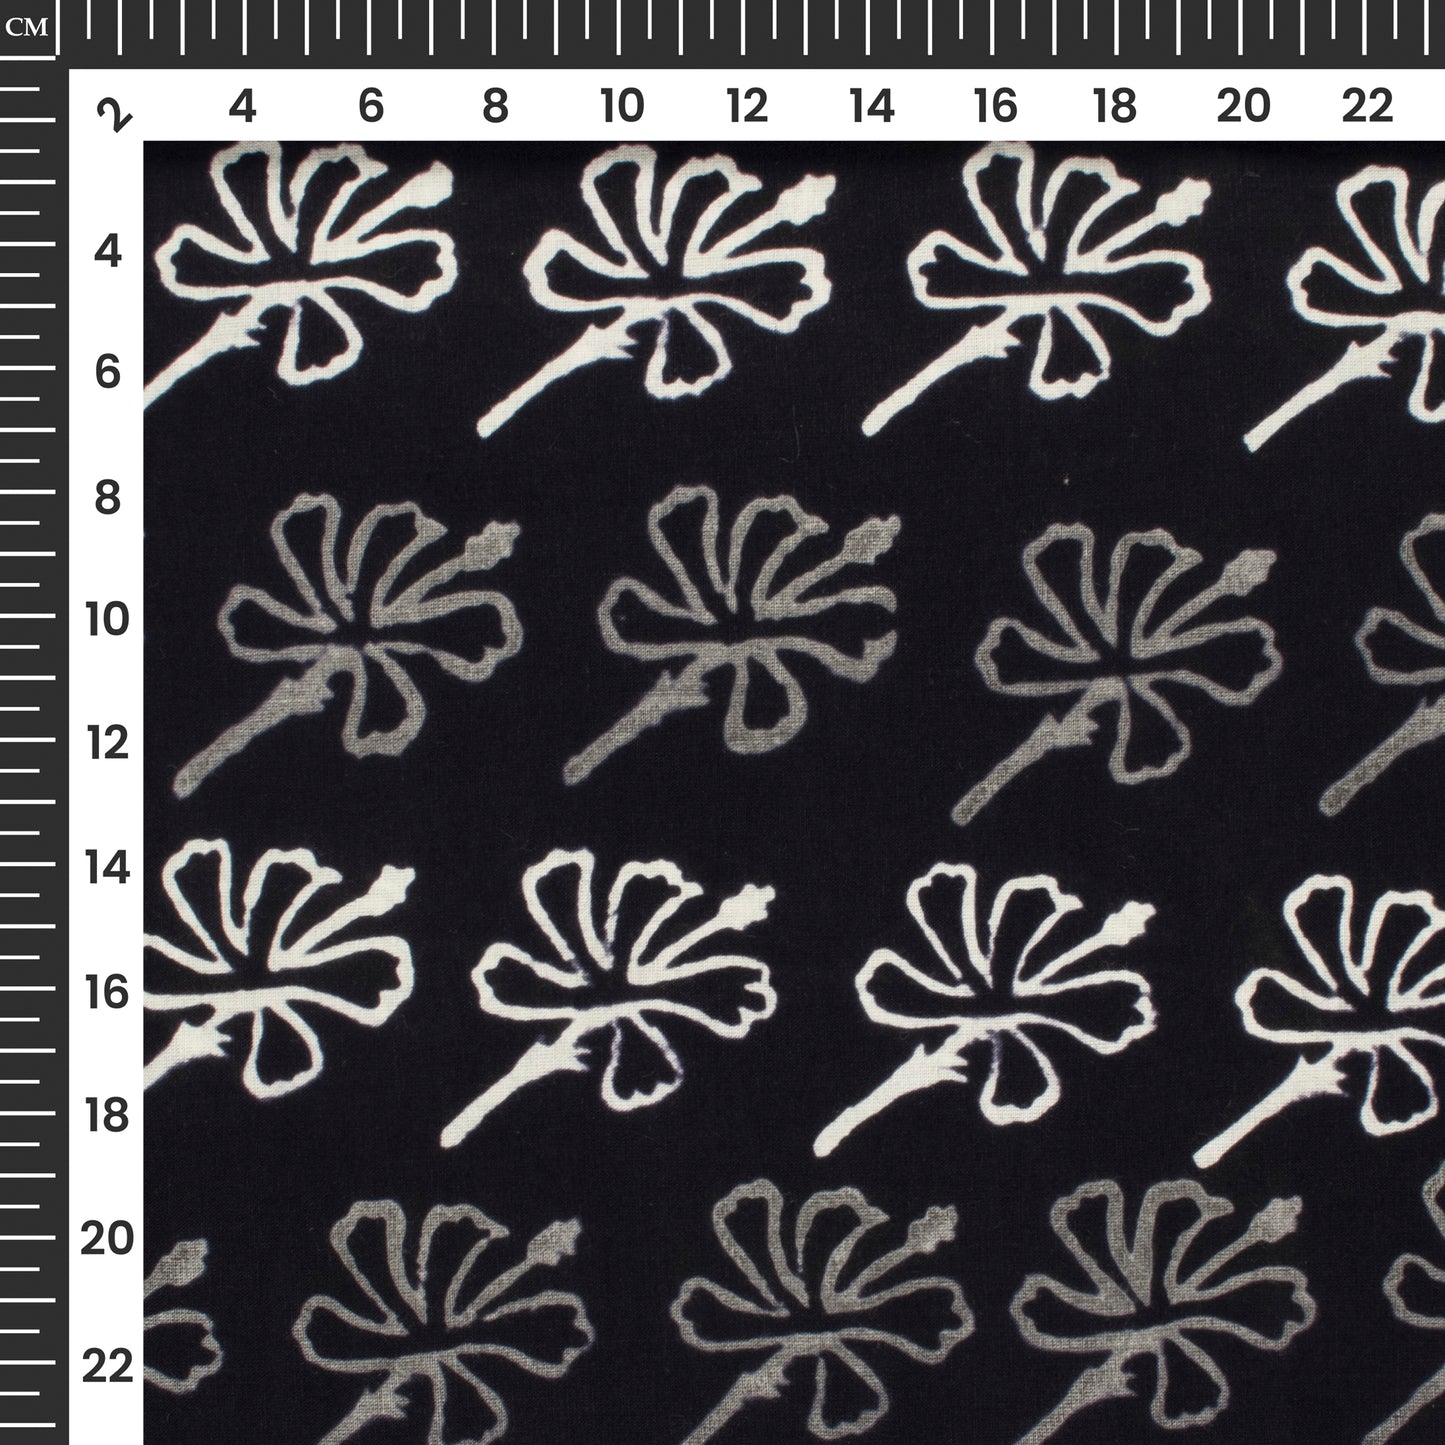 Monochrome Floral Pattern Handblock Cotton Fabric